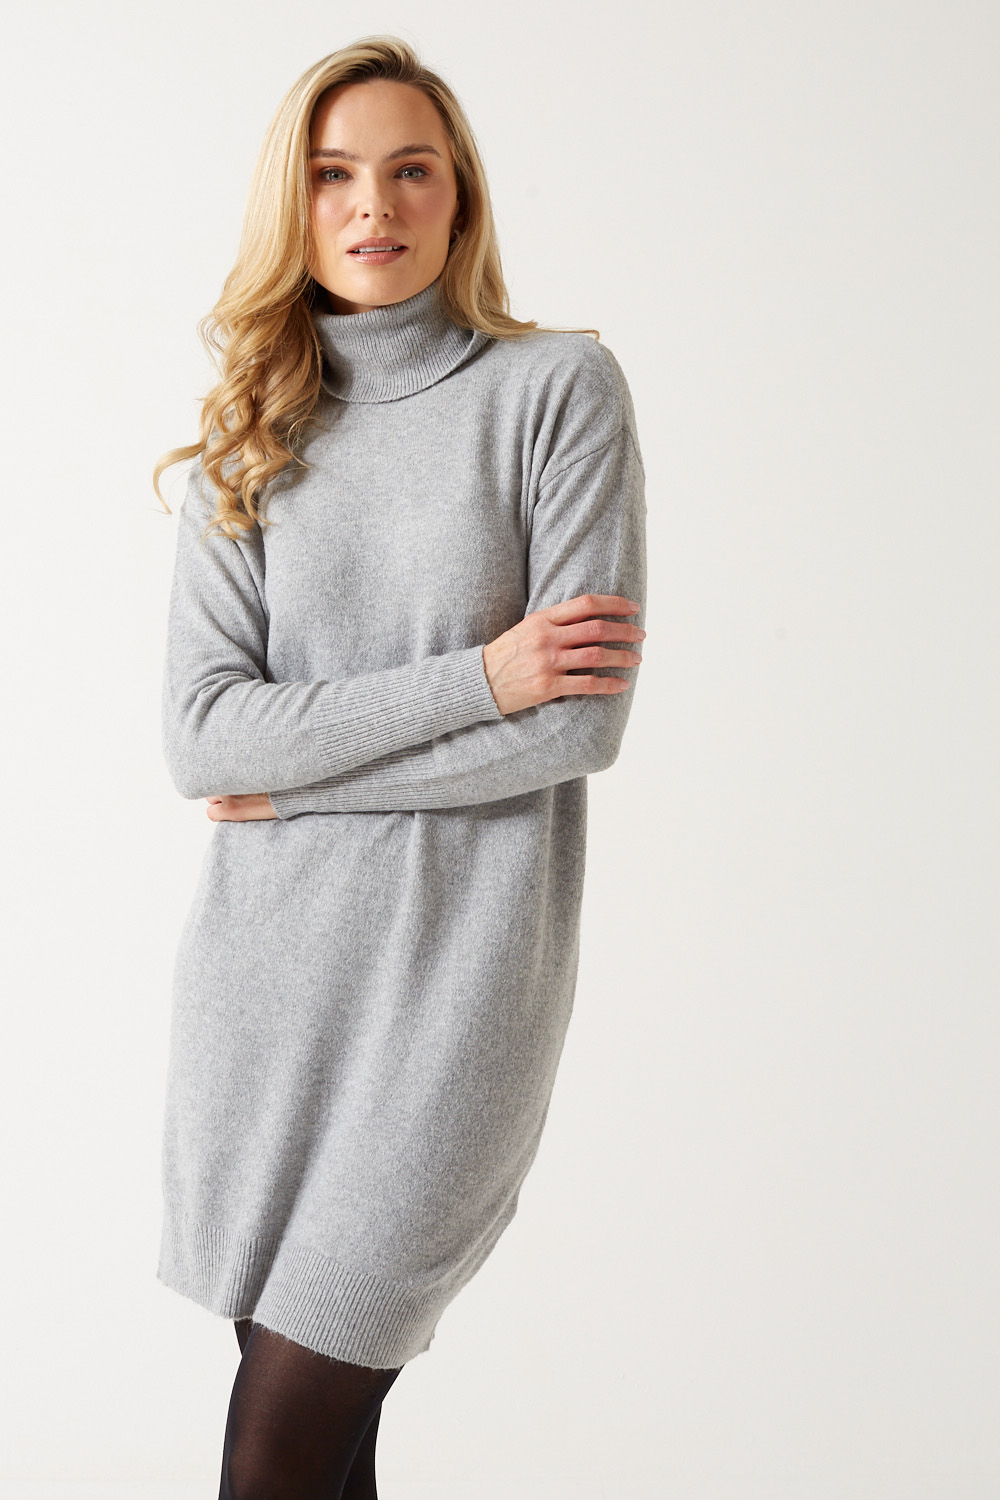 Brilliant Grey iCLOTHING Vero in Dress - | Moda iCLOTHING Light Jumper Rollneck